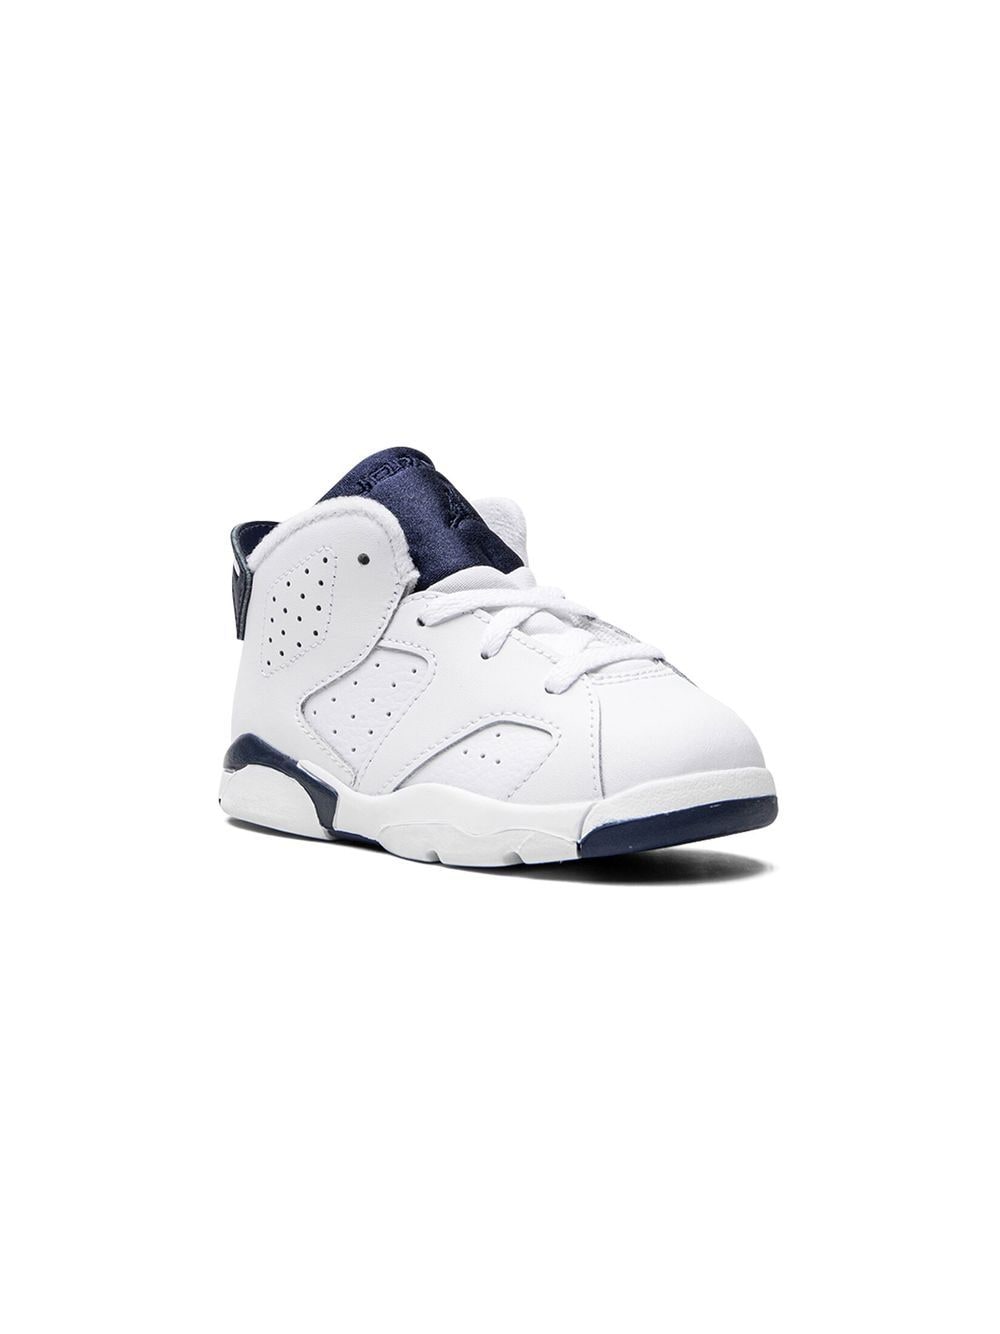 Jordan 6 Retro Bt Sneakers In White